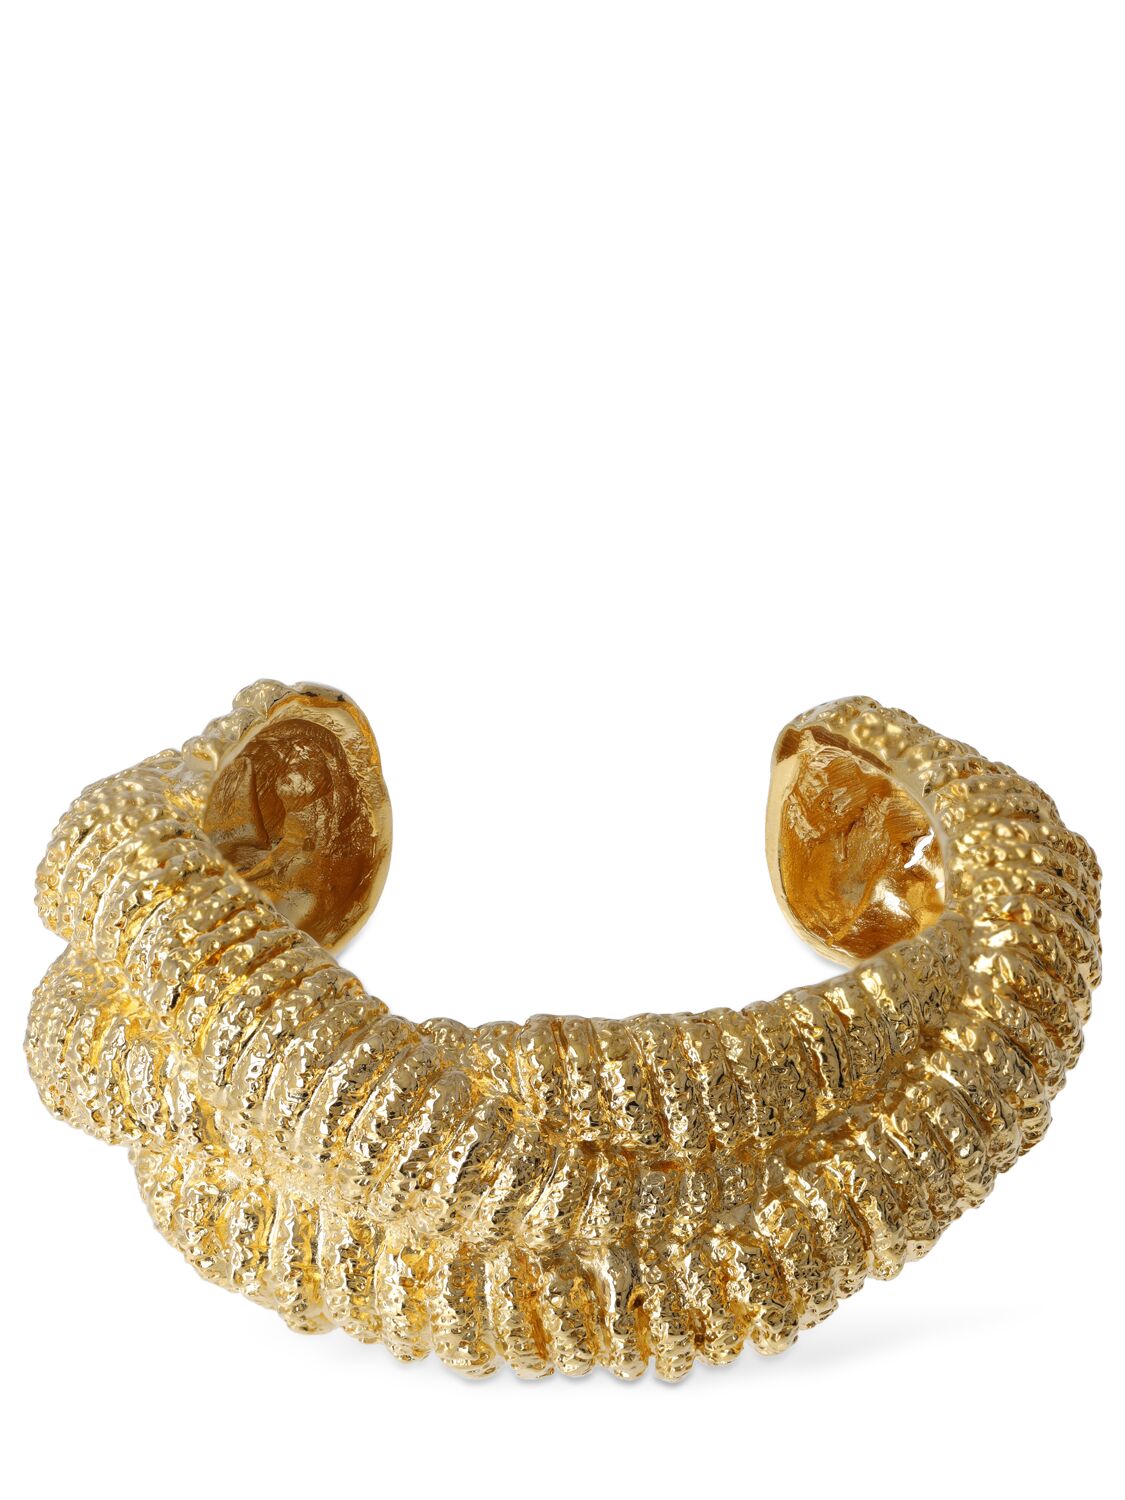 Paola Sighinolfi Nomad Cuff Bracelet In Gold